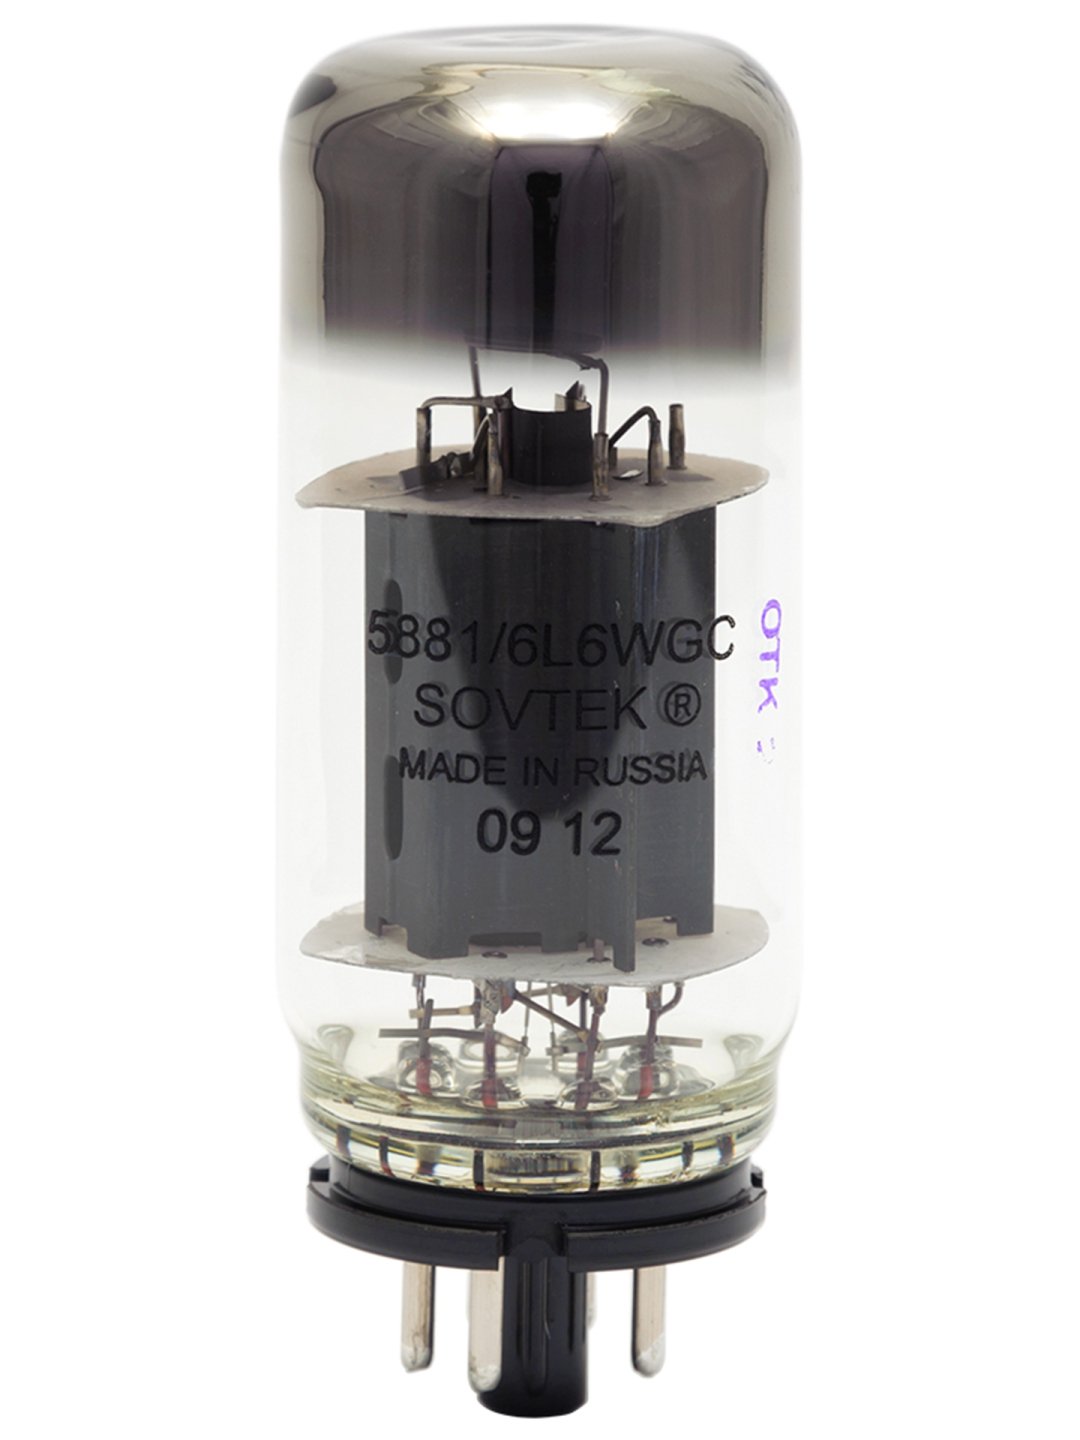 SOVTEK 5881/6L6WGC - テクソル オンラインショップ | 高品質真空管 （オーディオ用・ギター用）通販・通信販売専門店